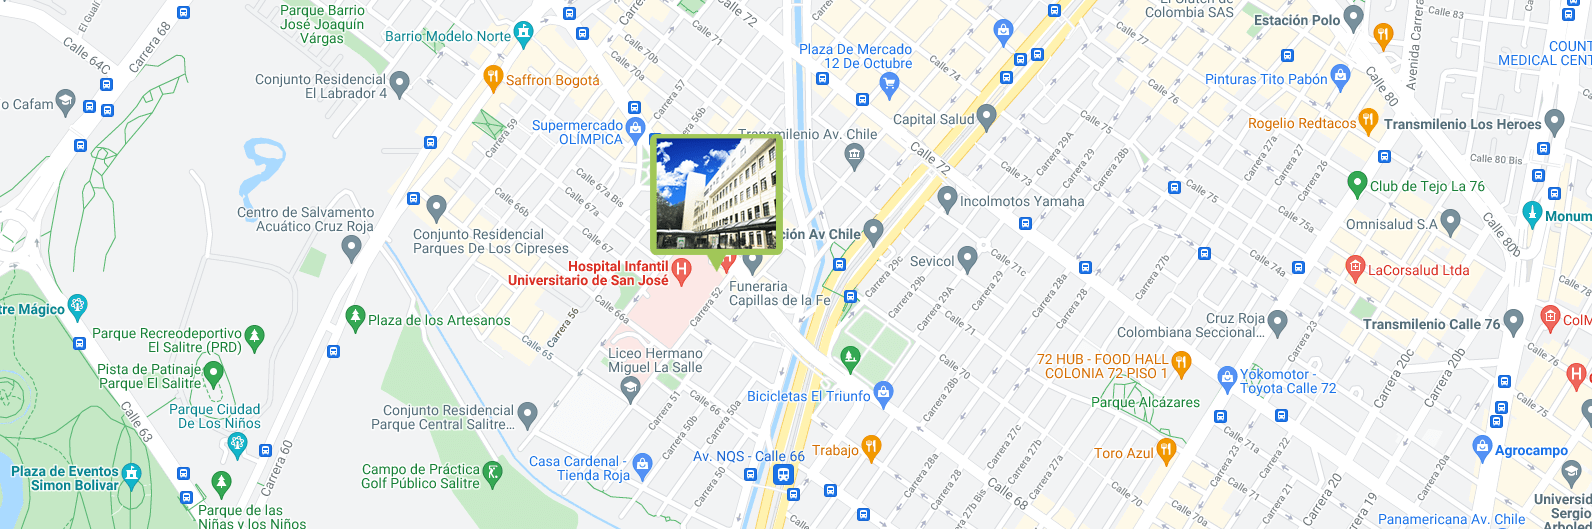 Mapa del Hospital Infantil Universitario de San José